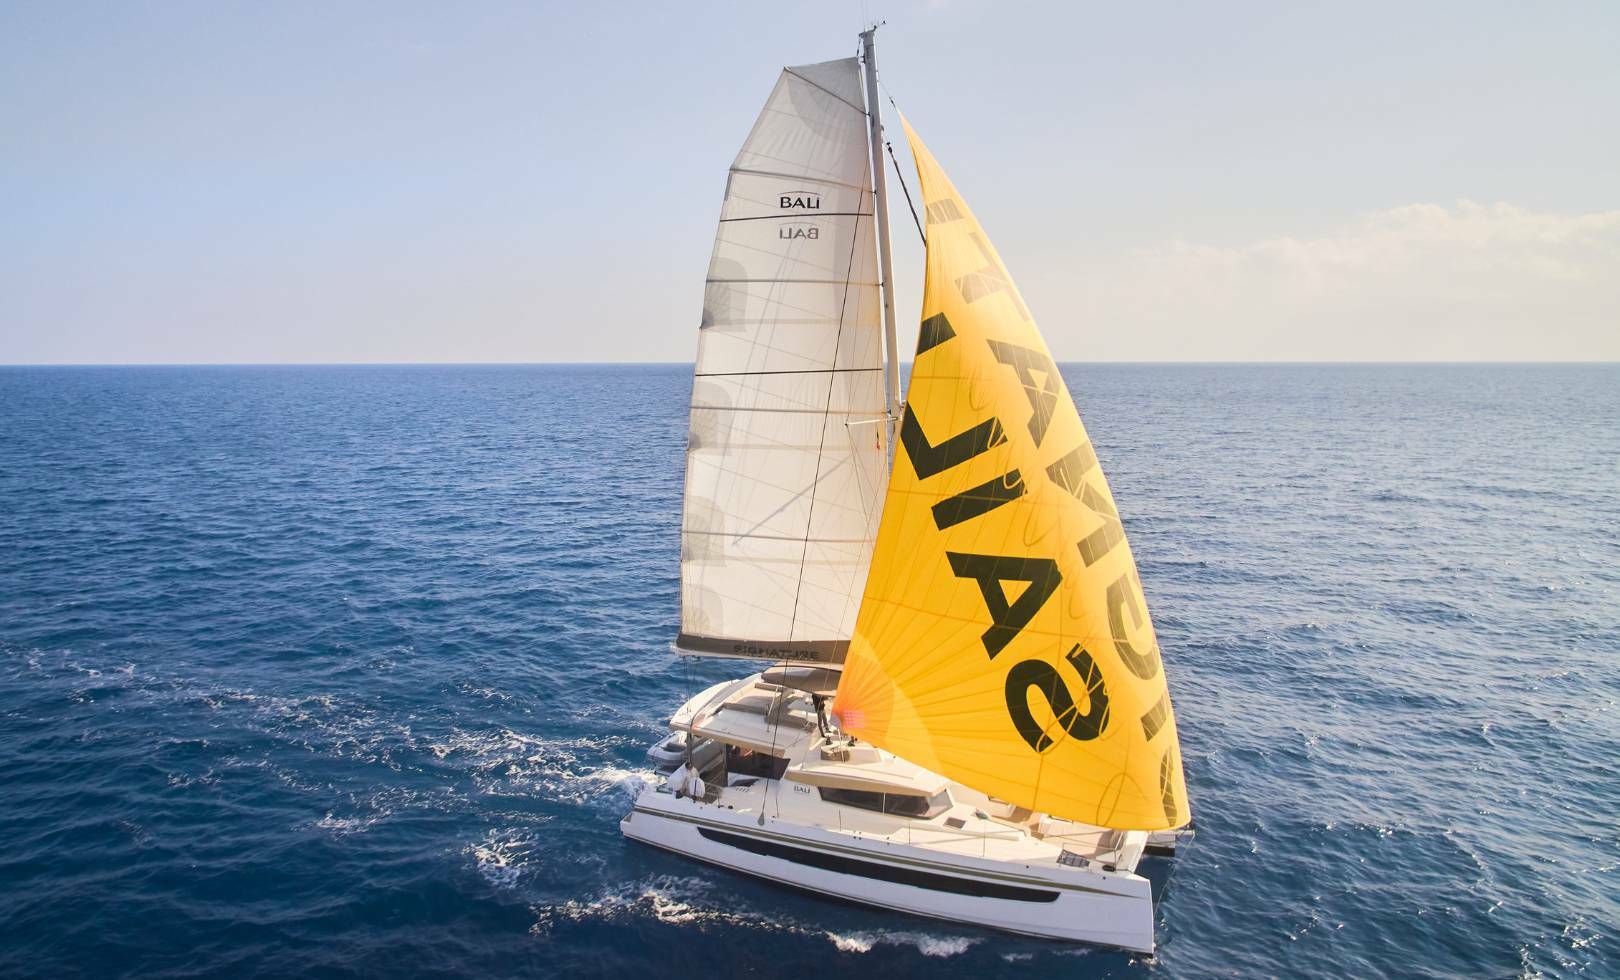 Catamaran FOR CHARTER, year 2022 brand Bali Catamaran and model 5.4, available in Club de Mar Palma Mallorca España